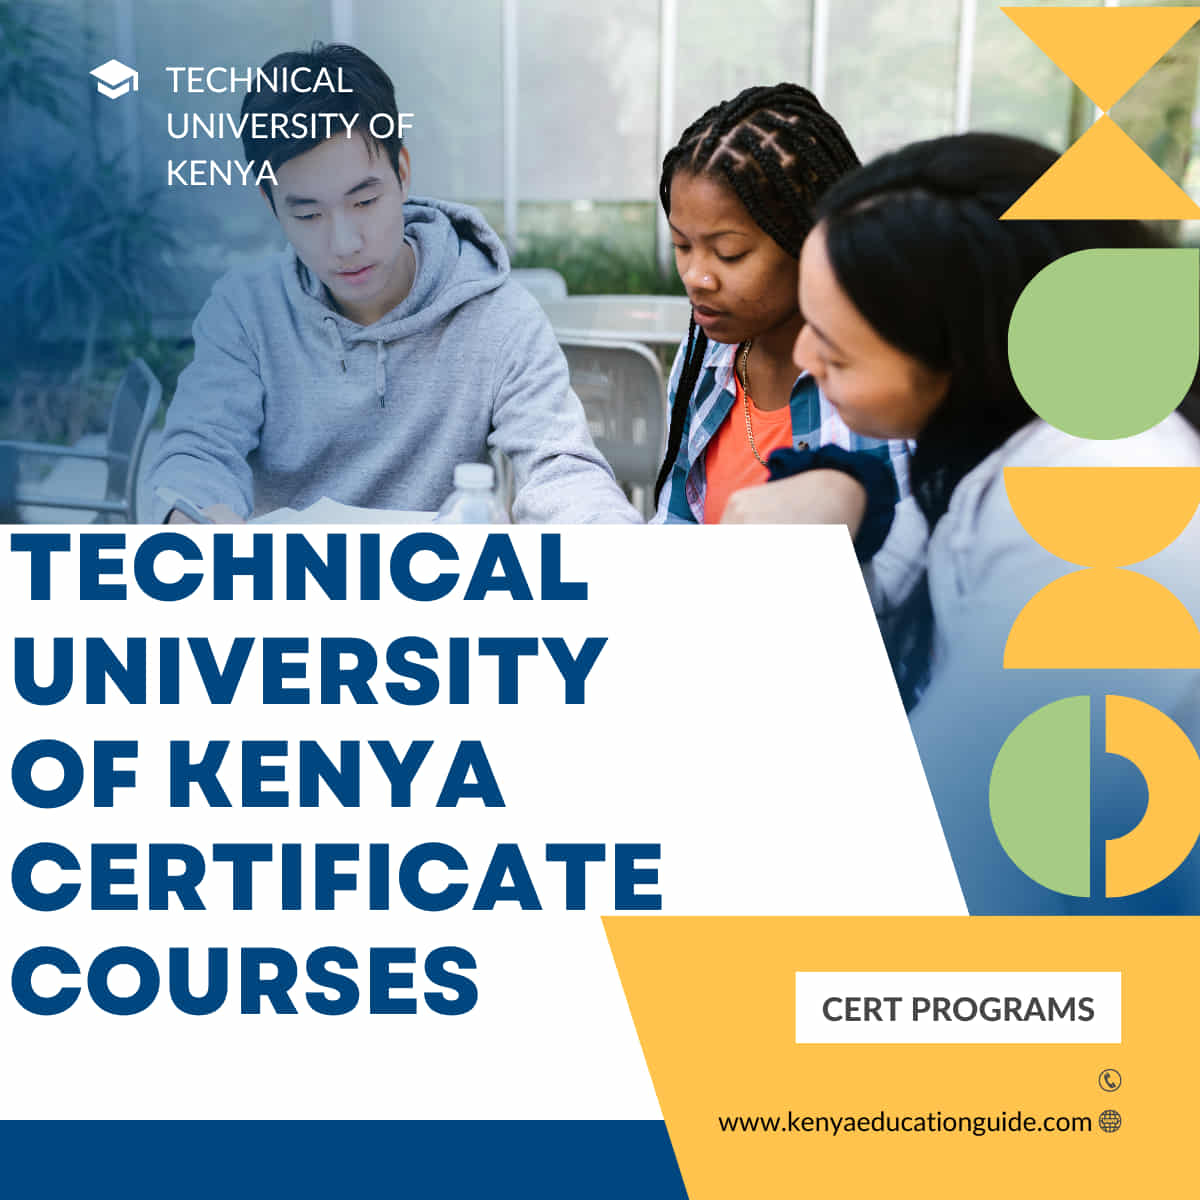 Technical university of Kenya certificate courses